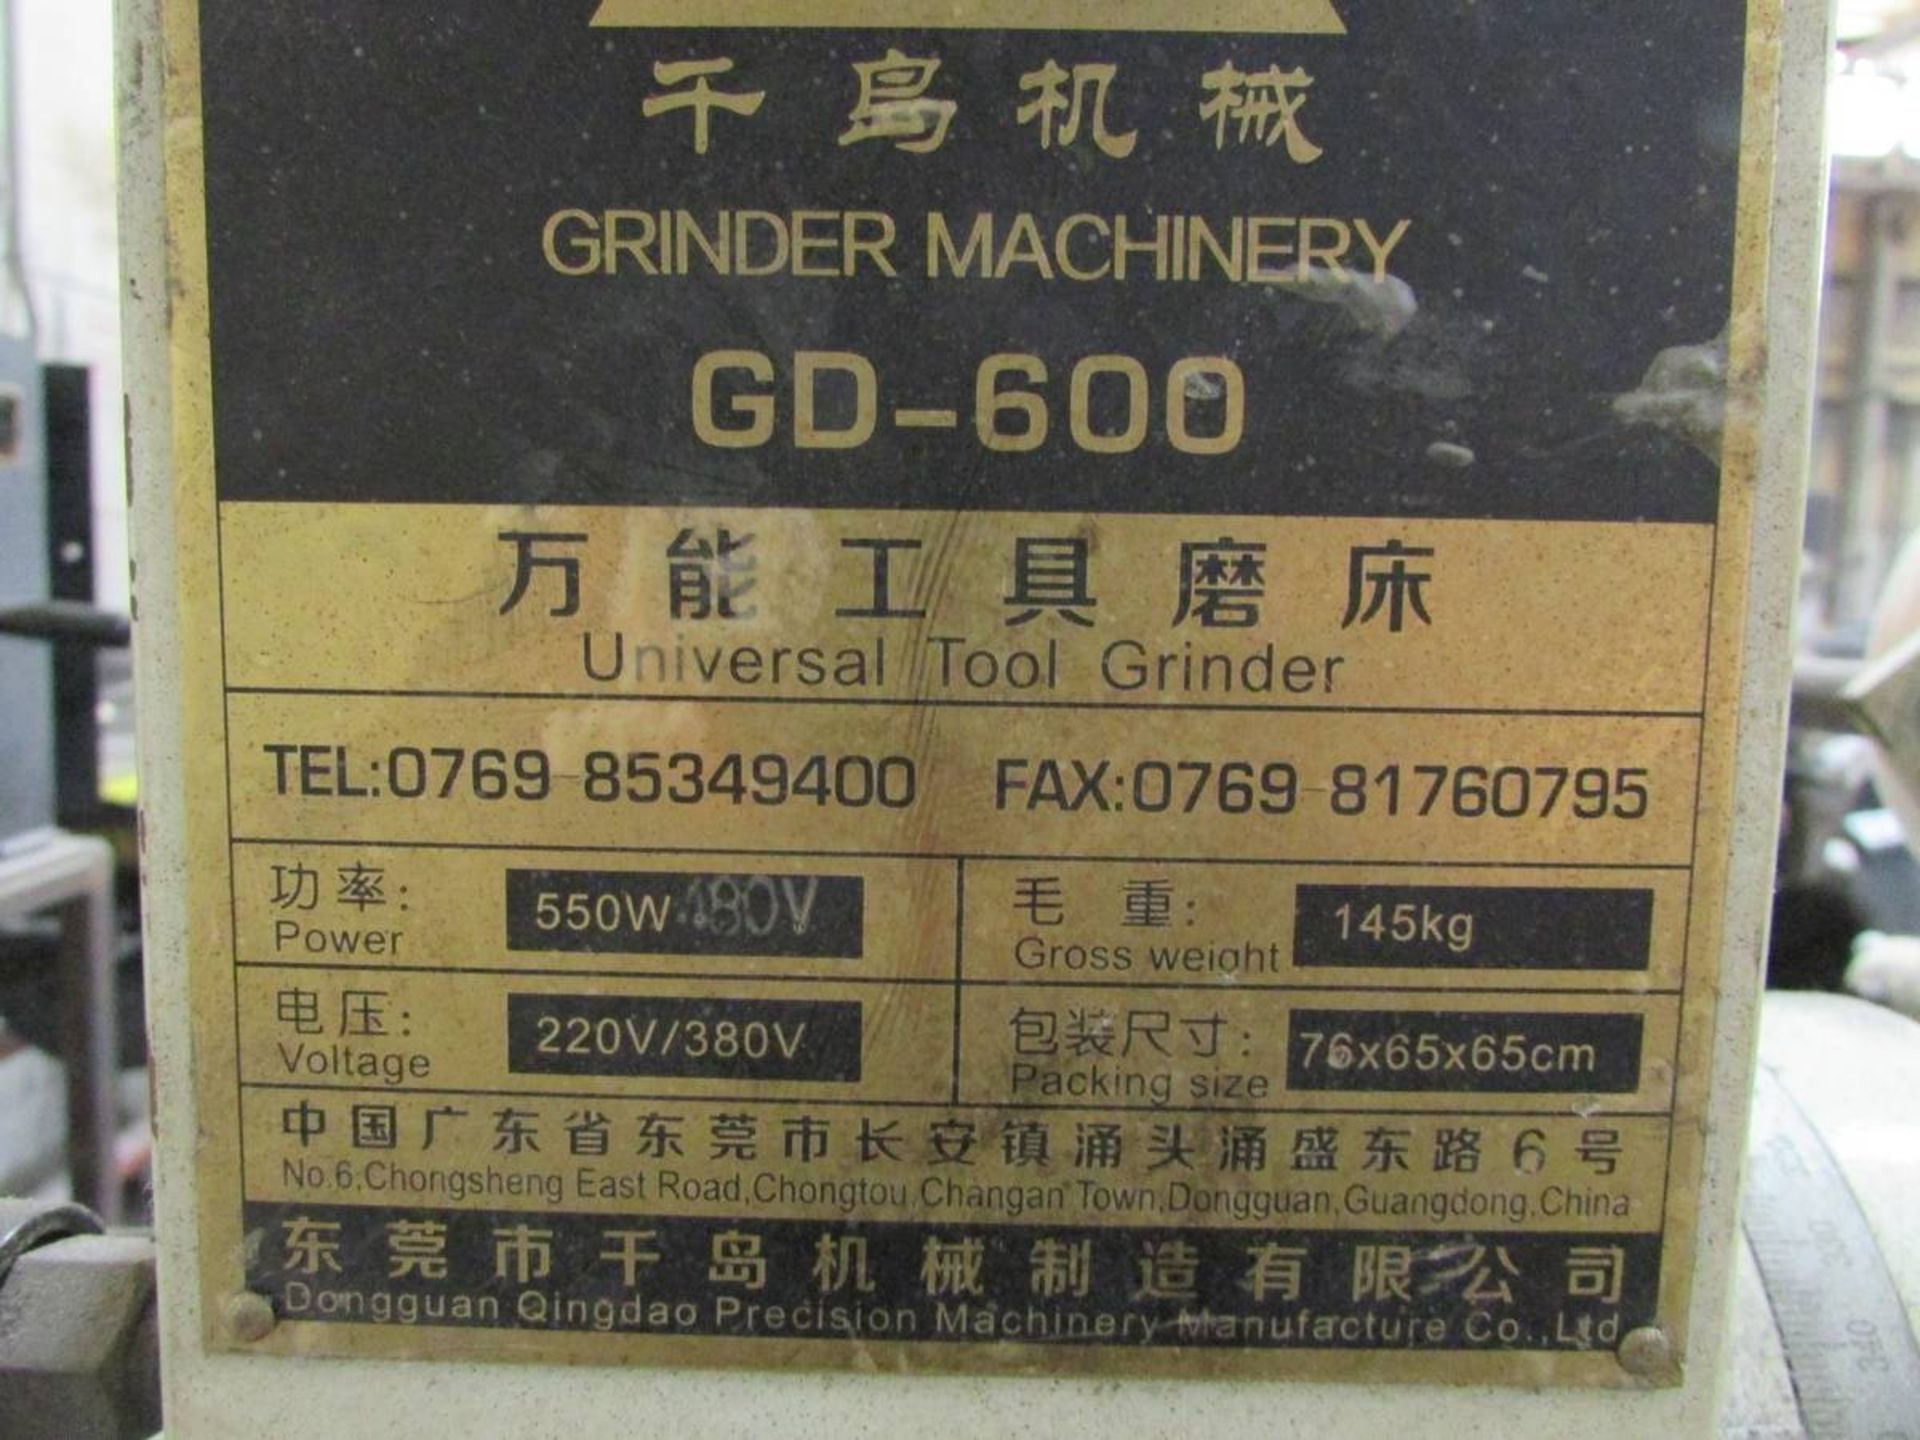 Dongguan Gingdao Precision Machinery GD-600 Universal Tool Grinder - Image 7 of 7